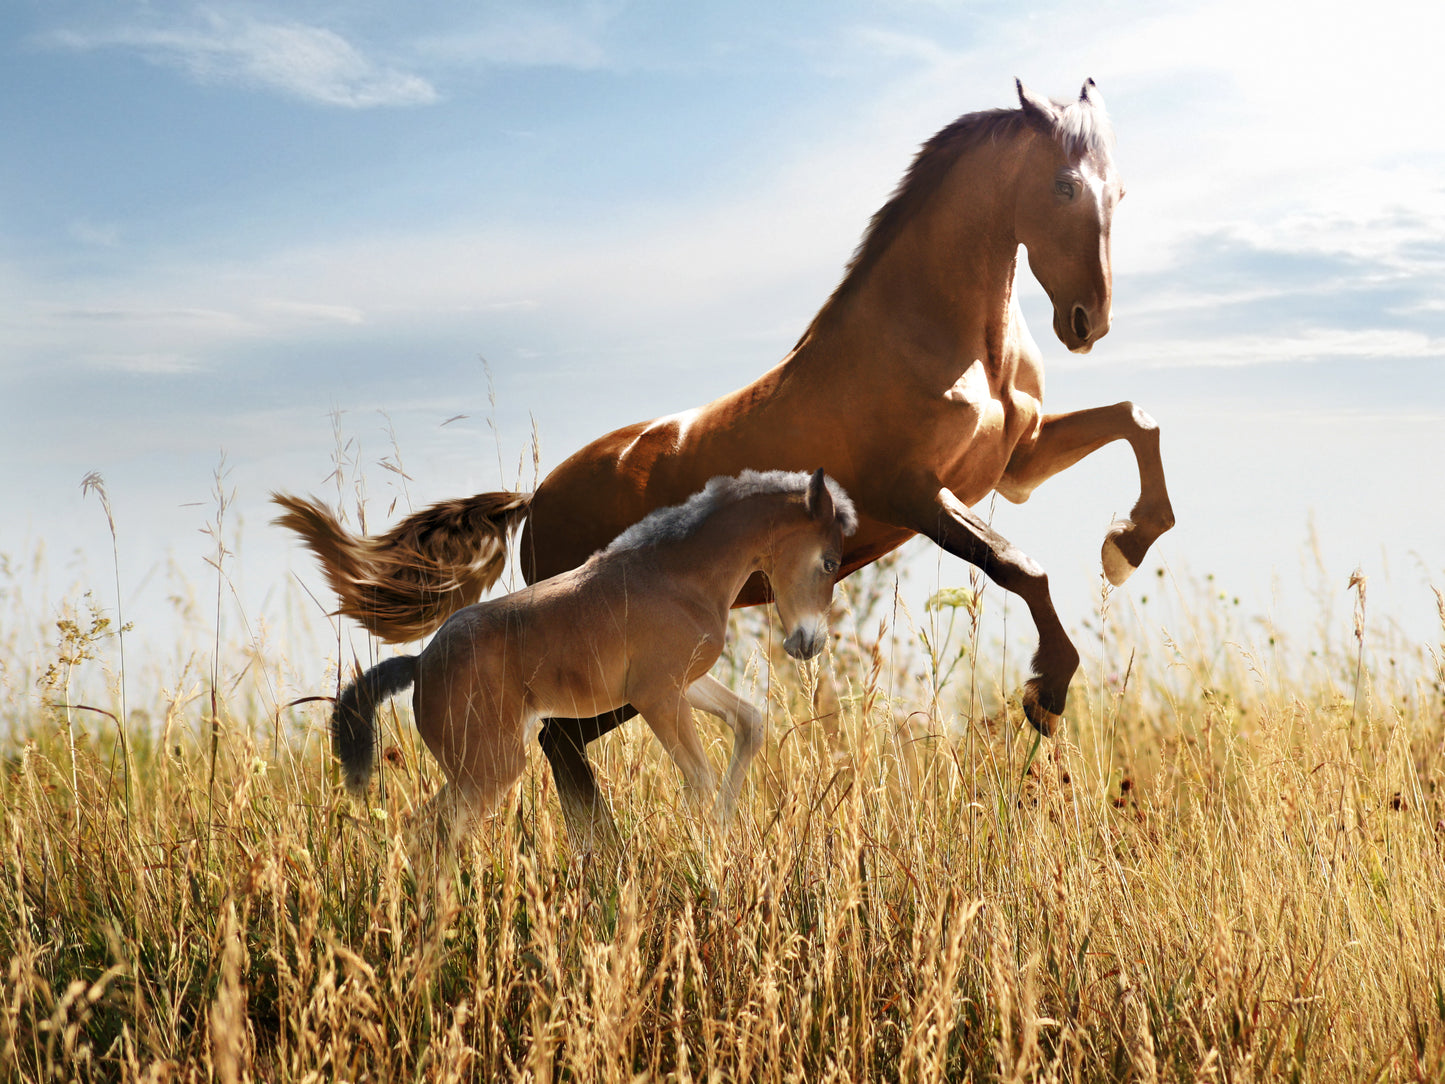 HORSES WILD & FREE 3D LENTICULAR INTERNALLY FRAMED ART 14" X 18"